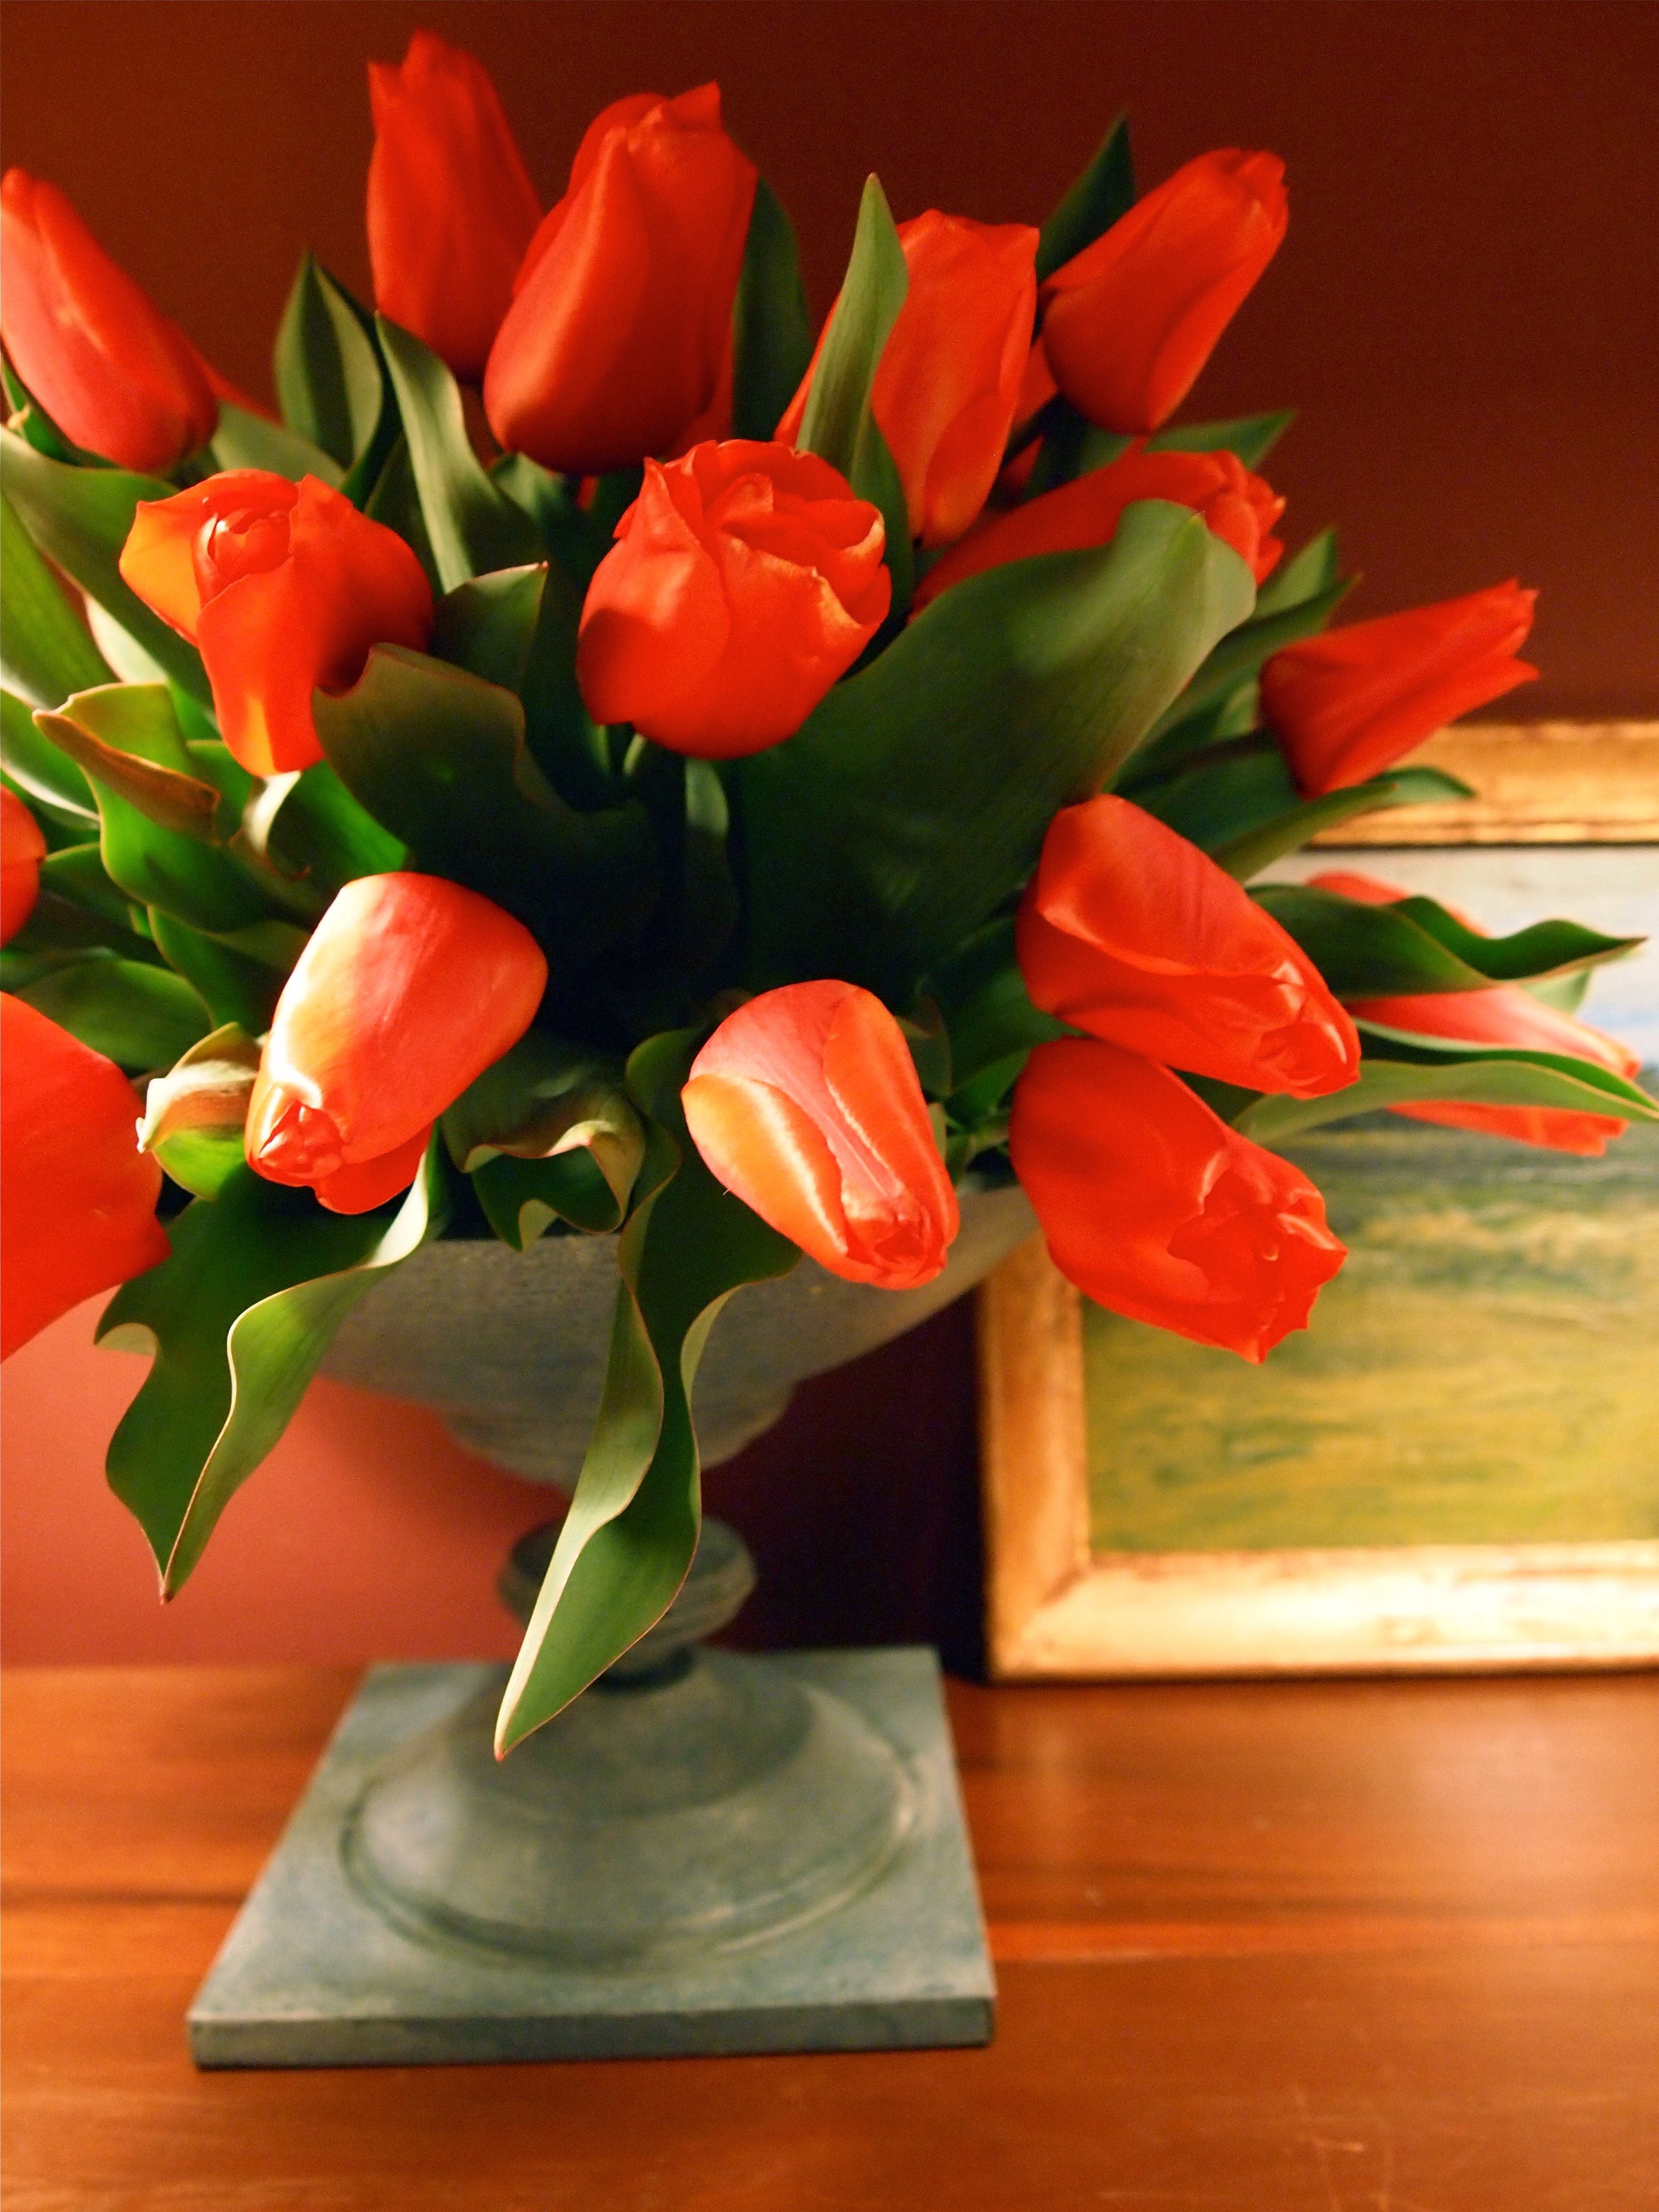 Fire Red Organic Tulips | FLOWERS | Pinterest | Flowers, Flower ...